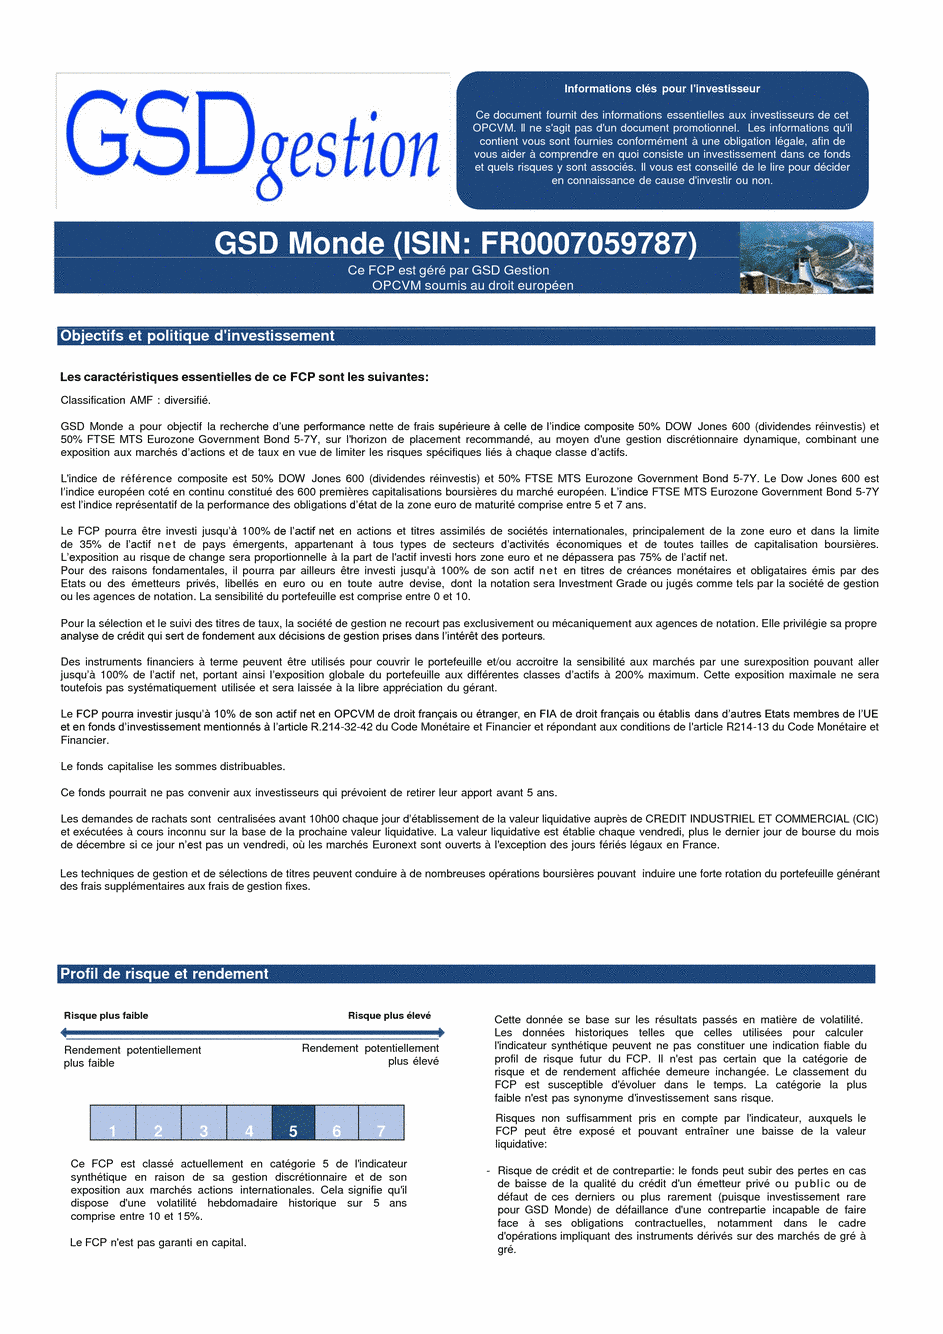 DICI-Prospectus GSD Monde - 12/01/2017 - French